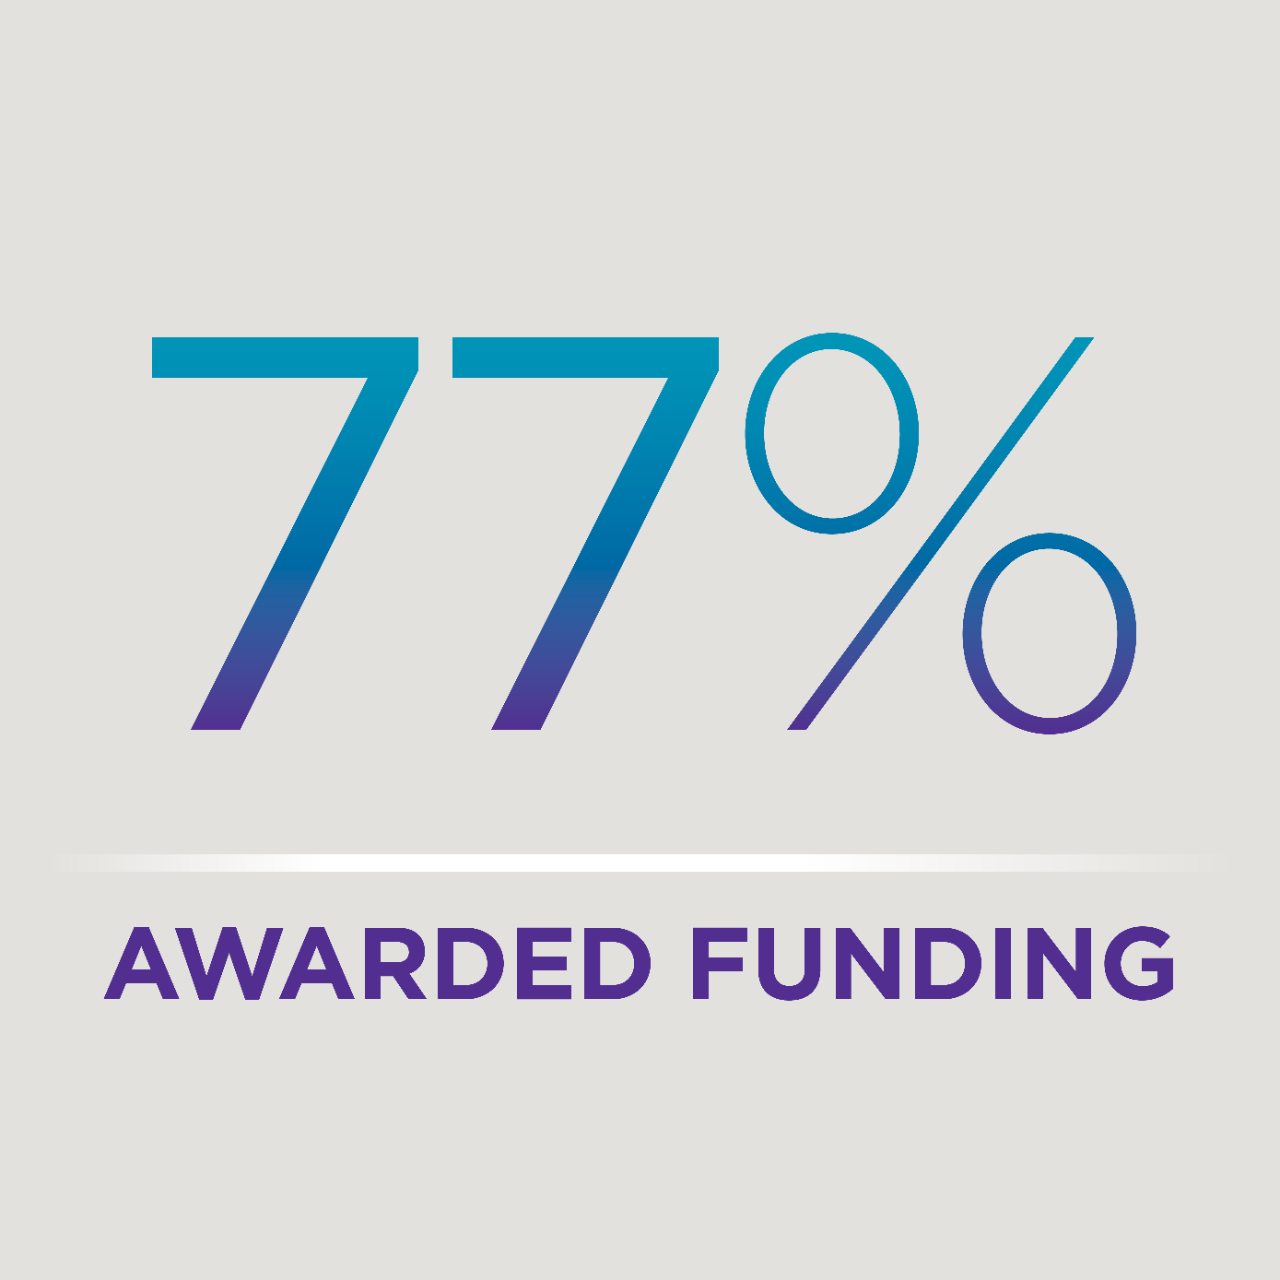 77% awarded funding